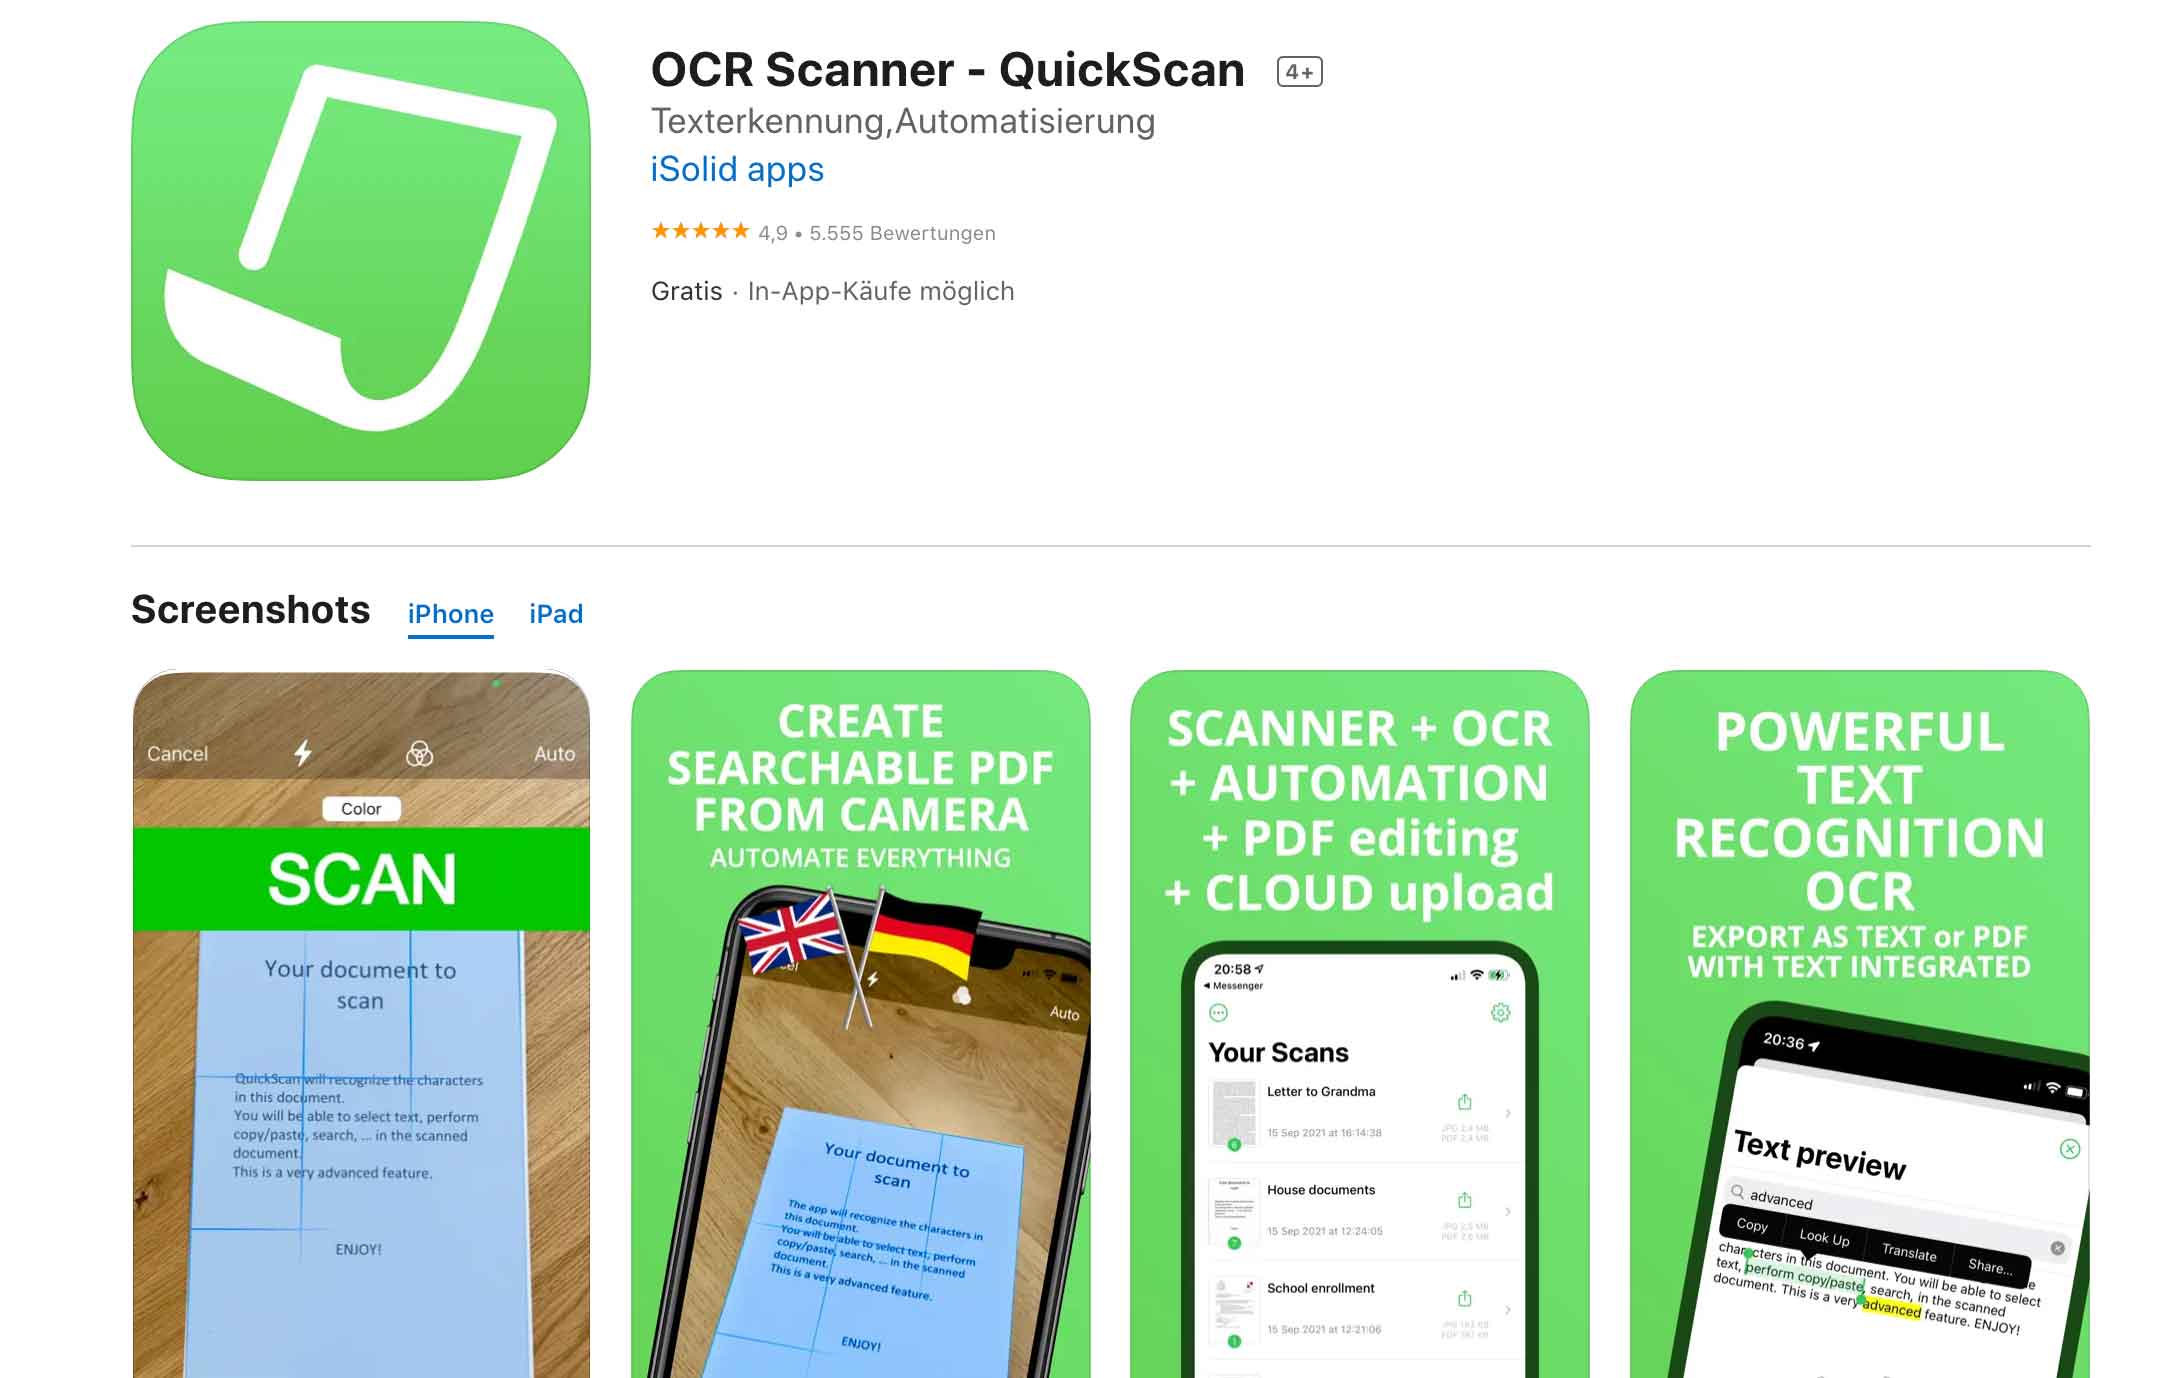 OCR Scanner - QuickScan